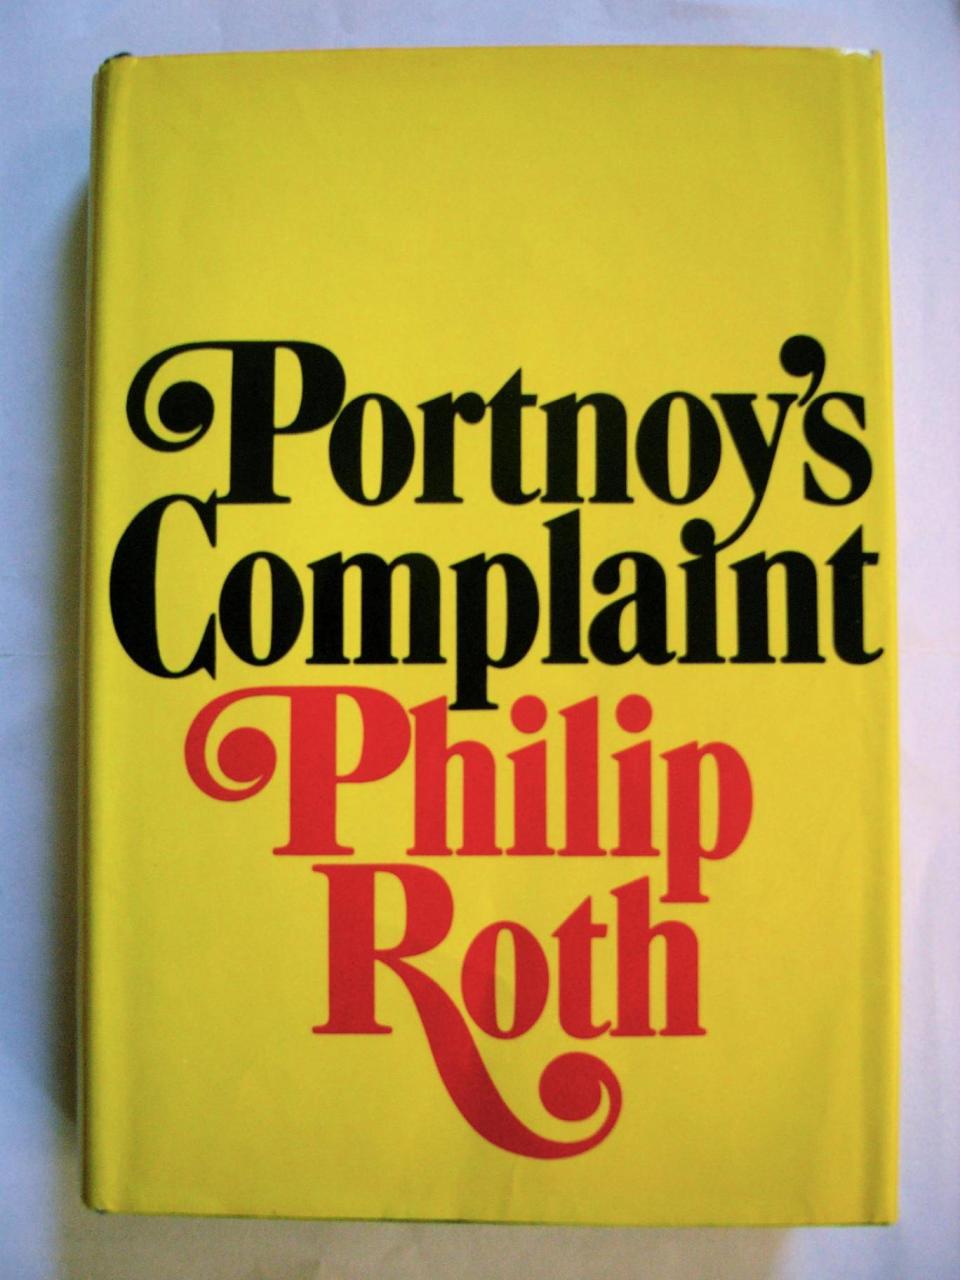 Roth’s ‘Portnoy’s Complaint’ is famous for its graphic descriptions of male masturbation (Flickr/Matt & Megan)